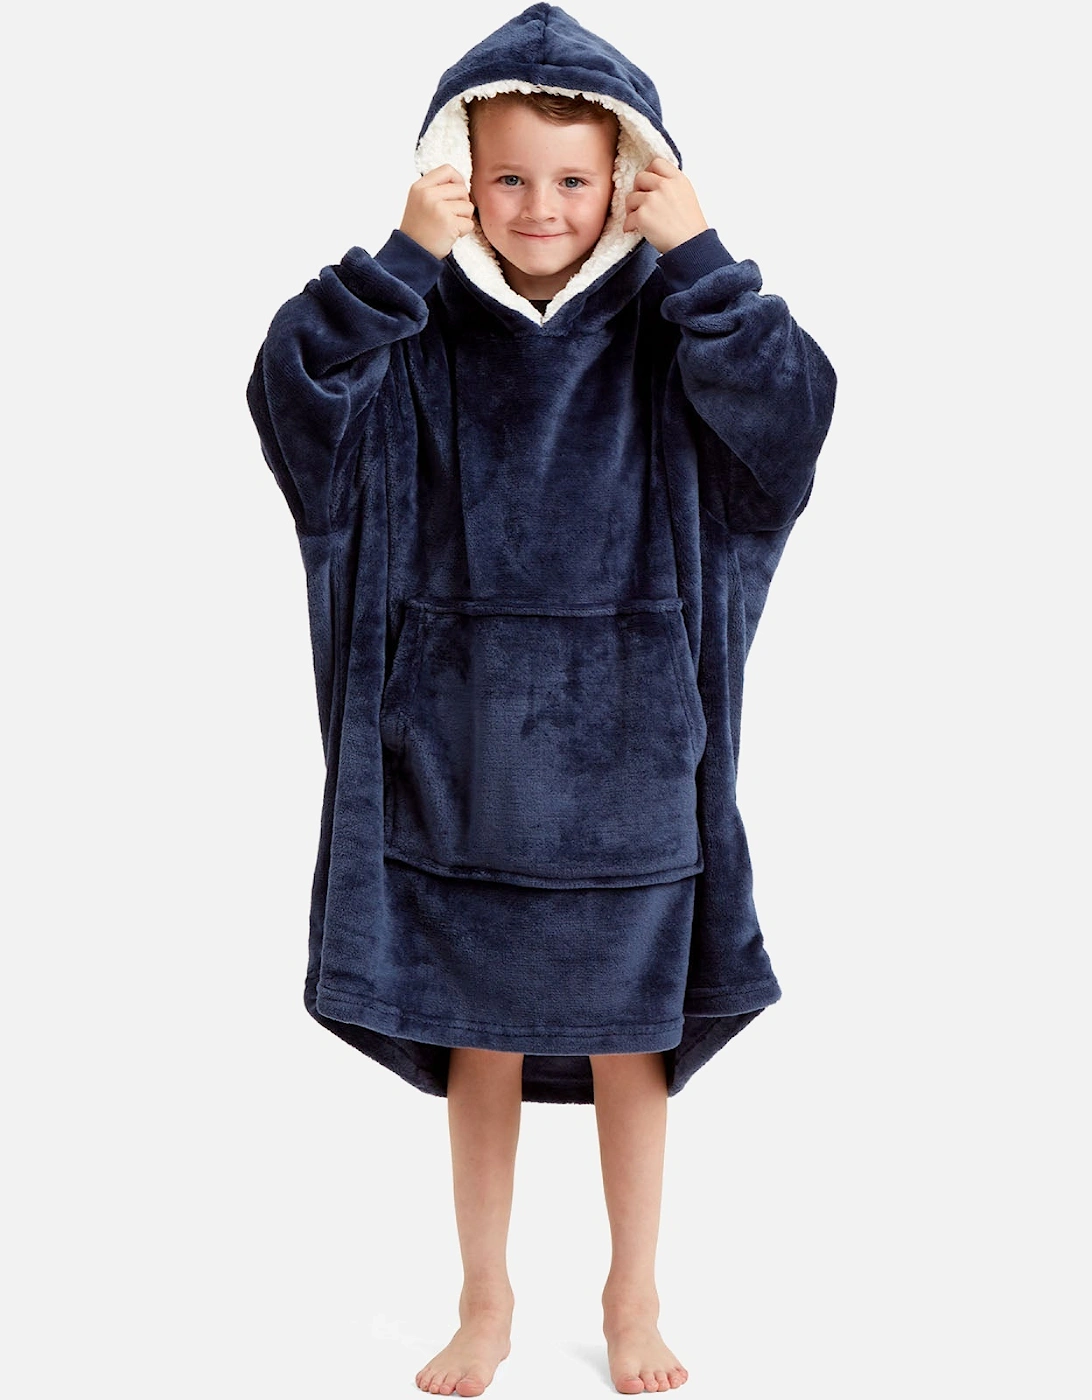 Kids Soft Oversized Wearable Blanket 6-14 Yrs